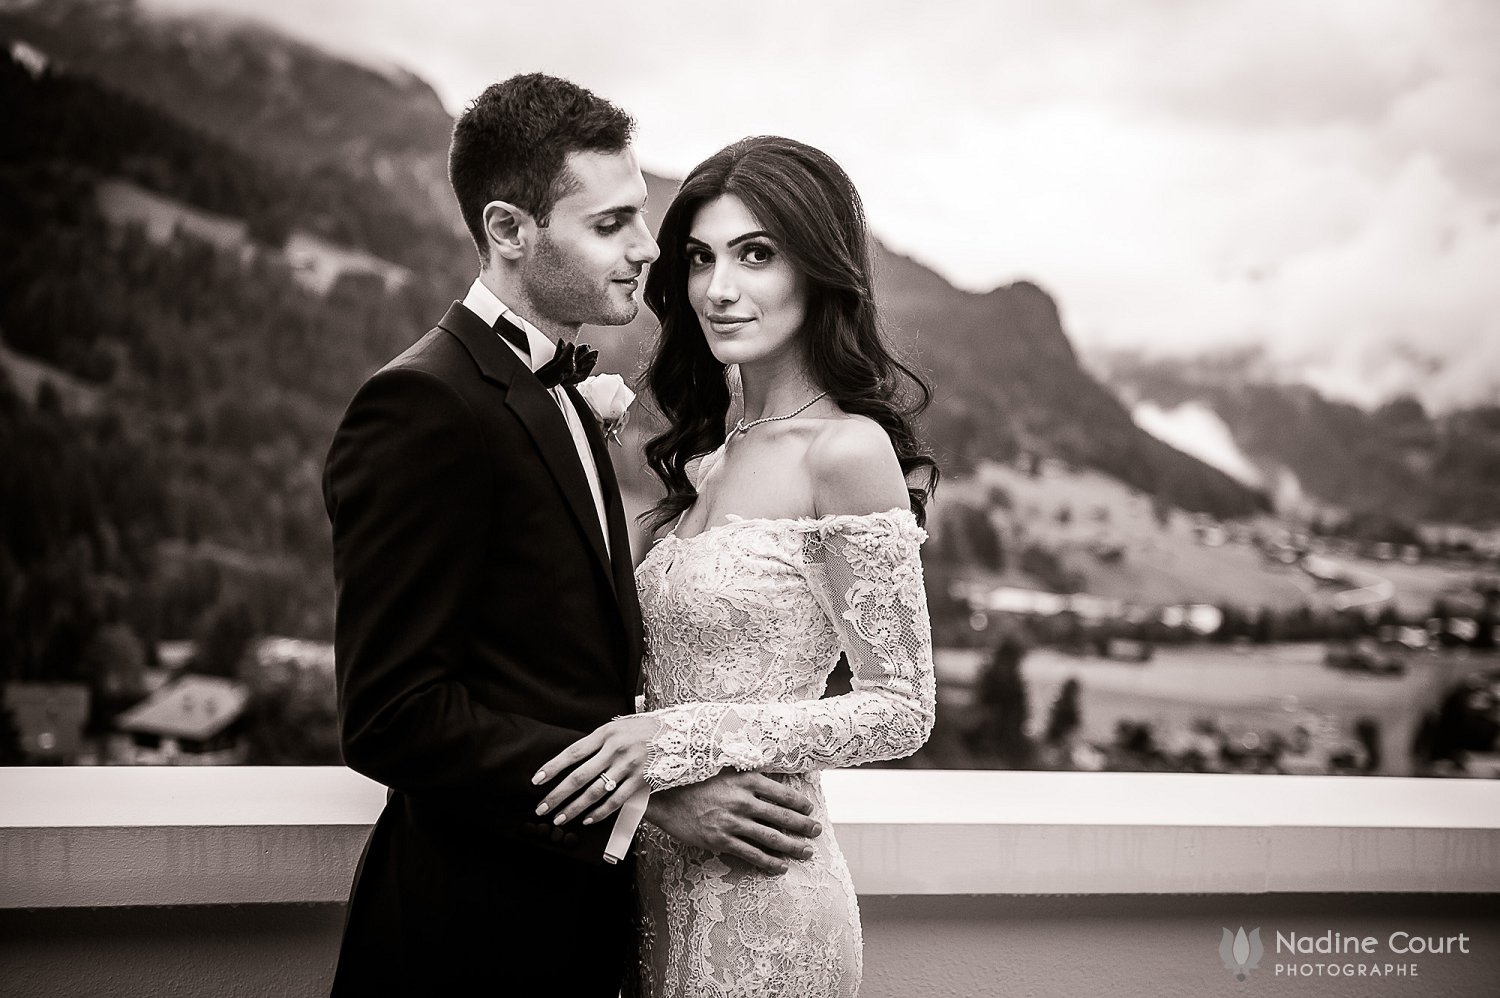 Mariage au Palace de Gstaad - wedding Gstaad Palace -Photos dans la suite Penthouse - Bride & groom in the Penthouse